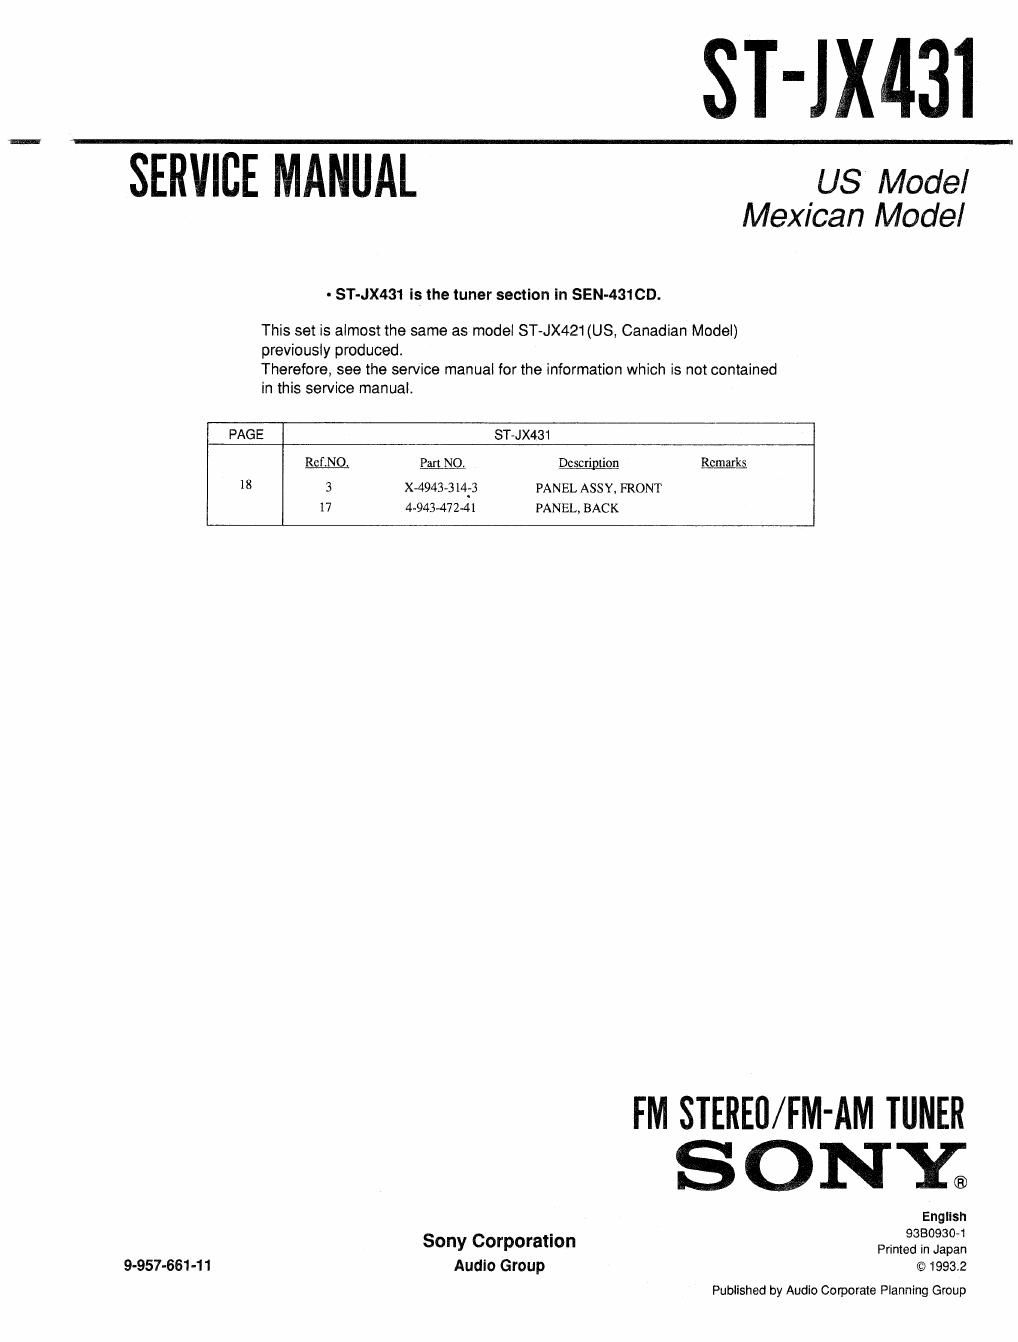 sony st jx 431 service manual